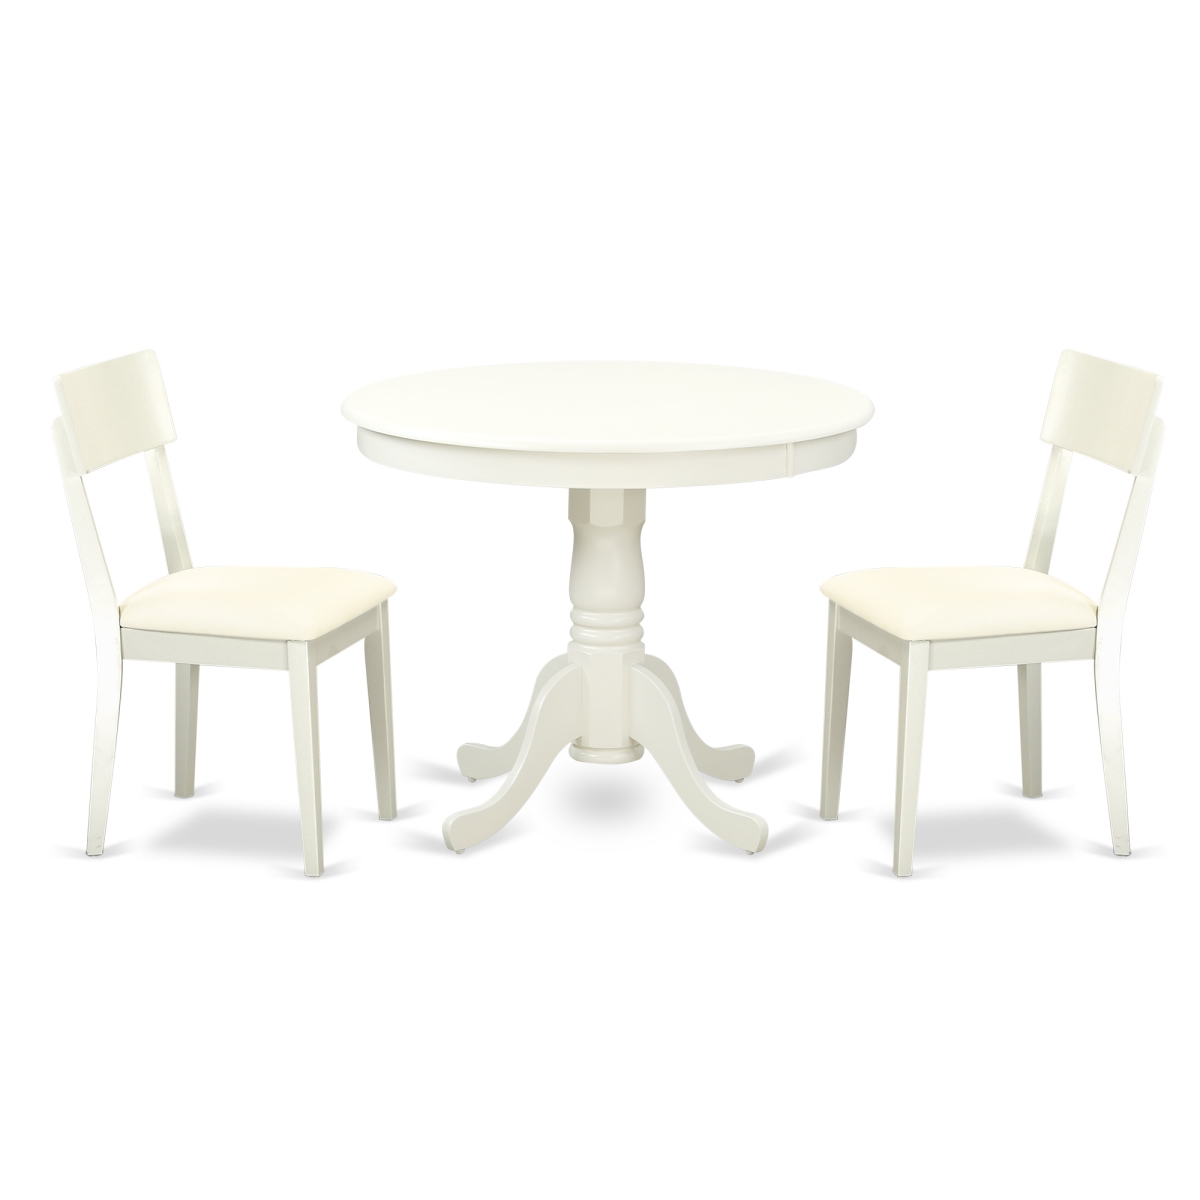 Anad3-lwh-lc 3 Piece Kitchen Table Set, Linen White